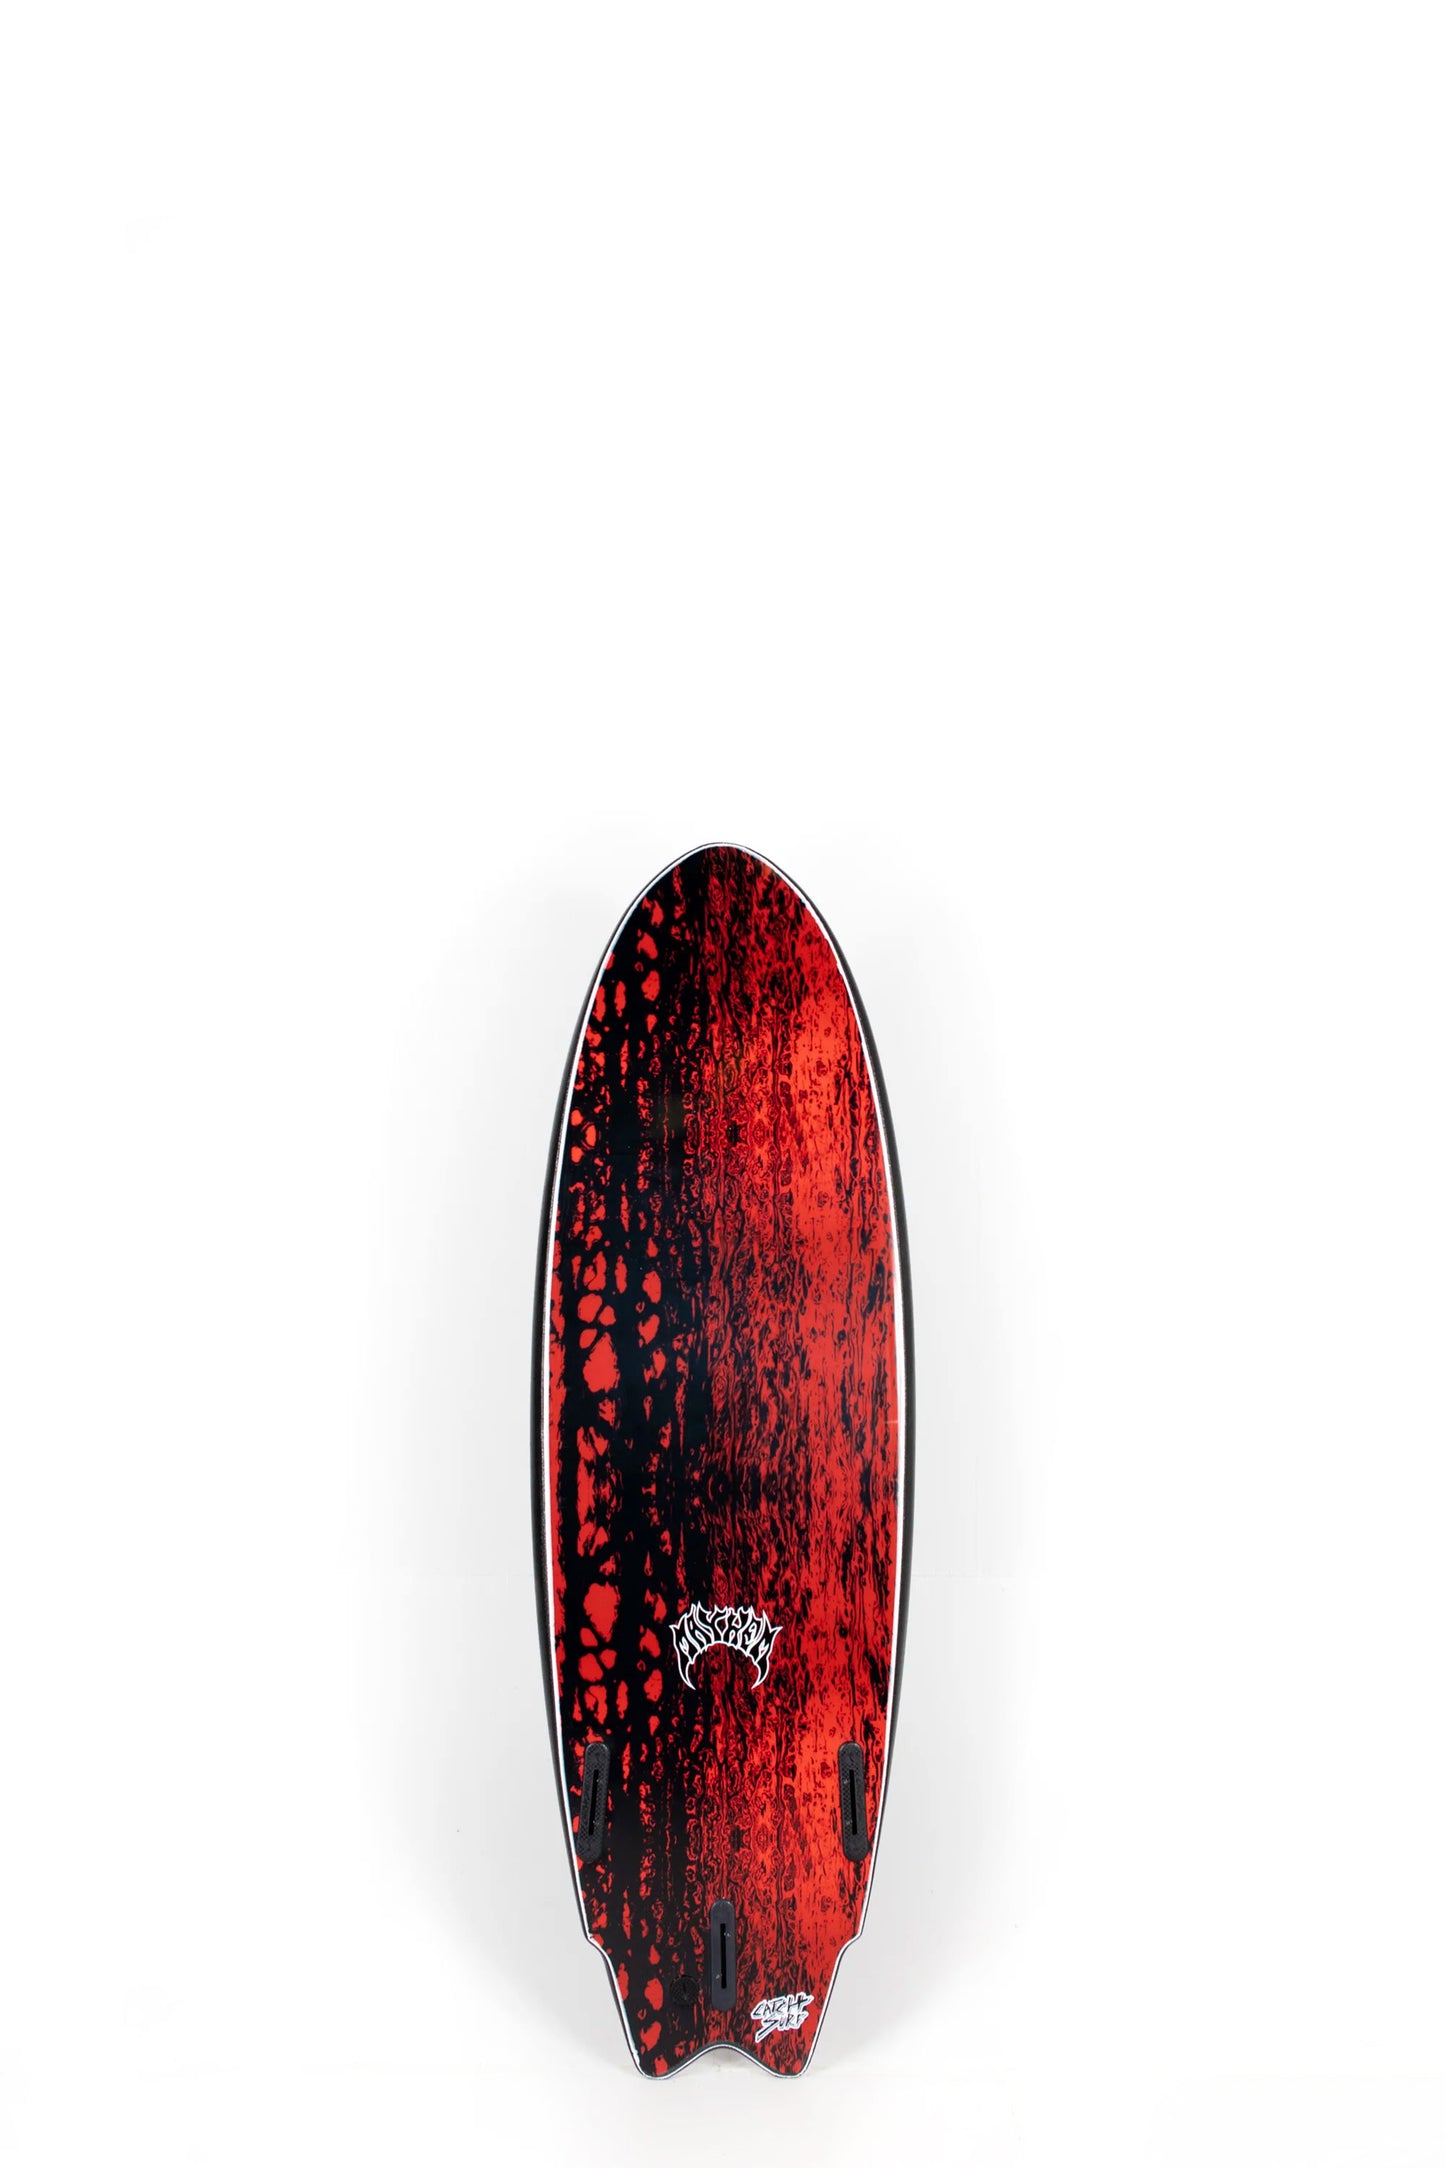 Pukas Surf Shop - Catch Surf - Odysea LOST RNF - 5'5" x 20 x 2,5 x 42L